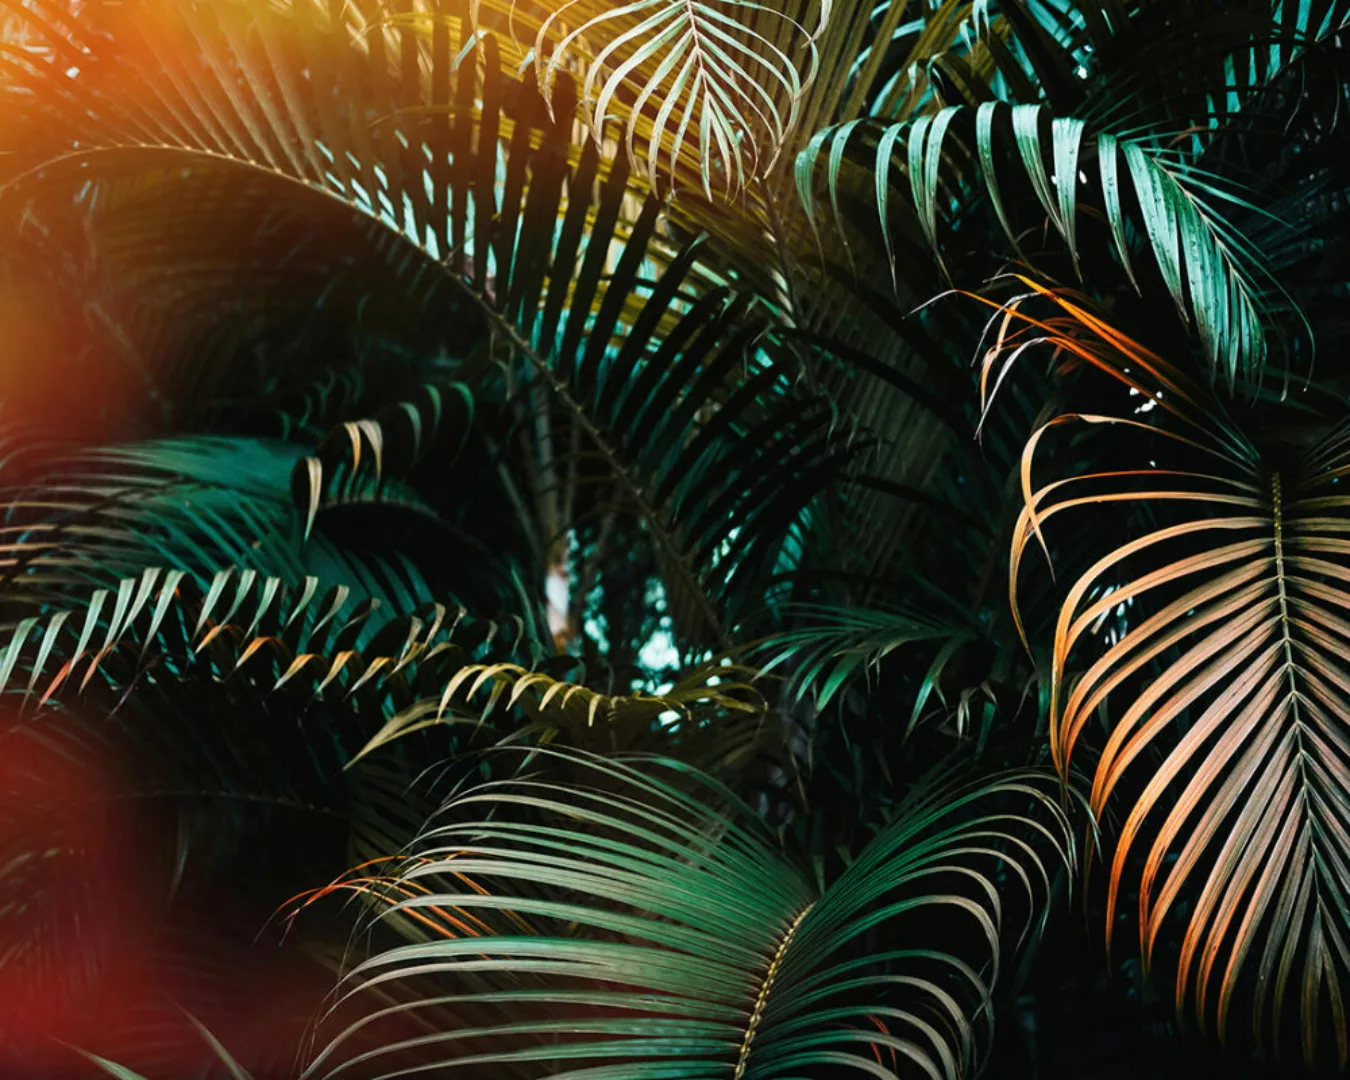 Fototapete "Jungle colour" 3,50x2,55 m / Glattvlies Perlmutt günstig online kaufen